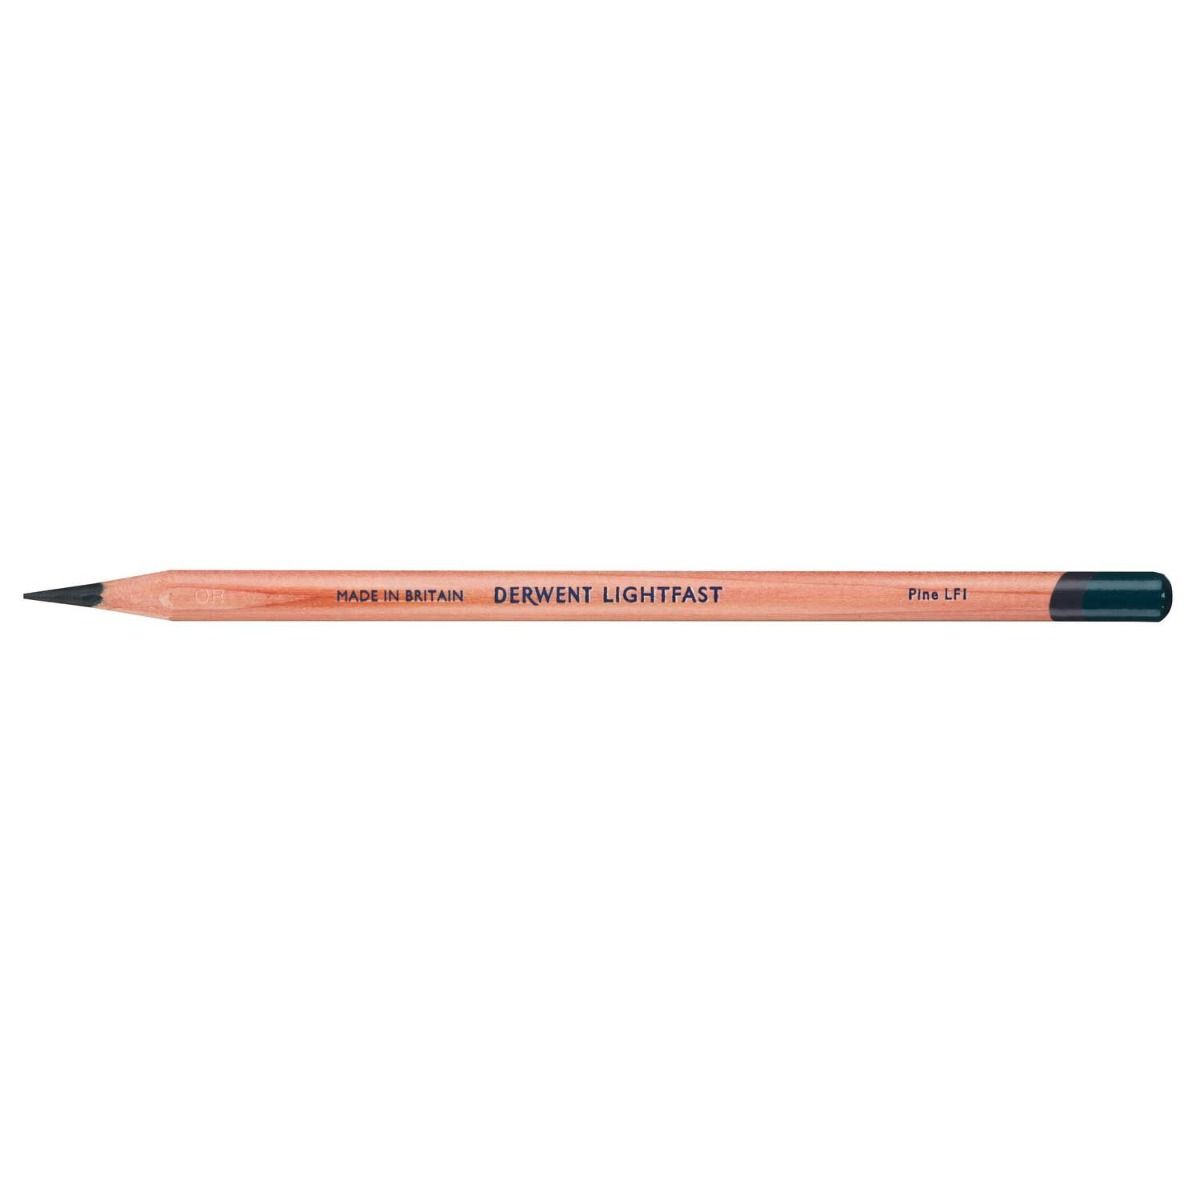 Derwent Lightfast Pencil Colour: Pine